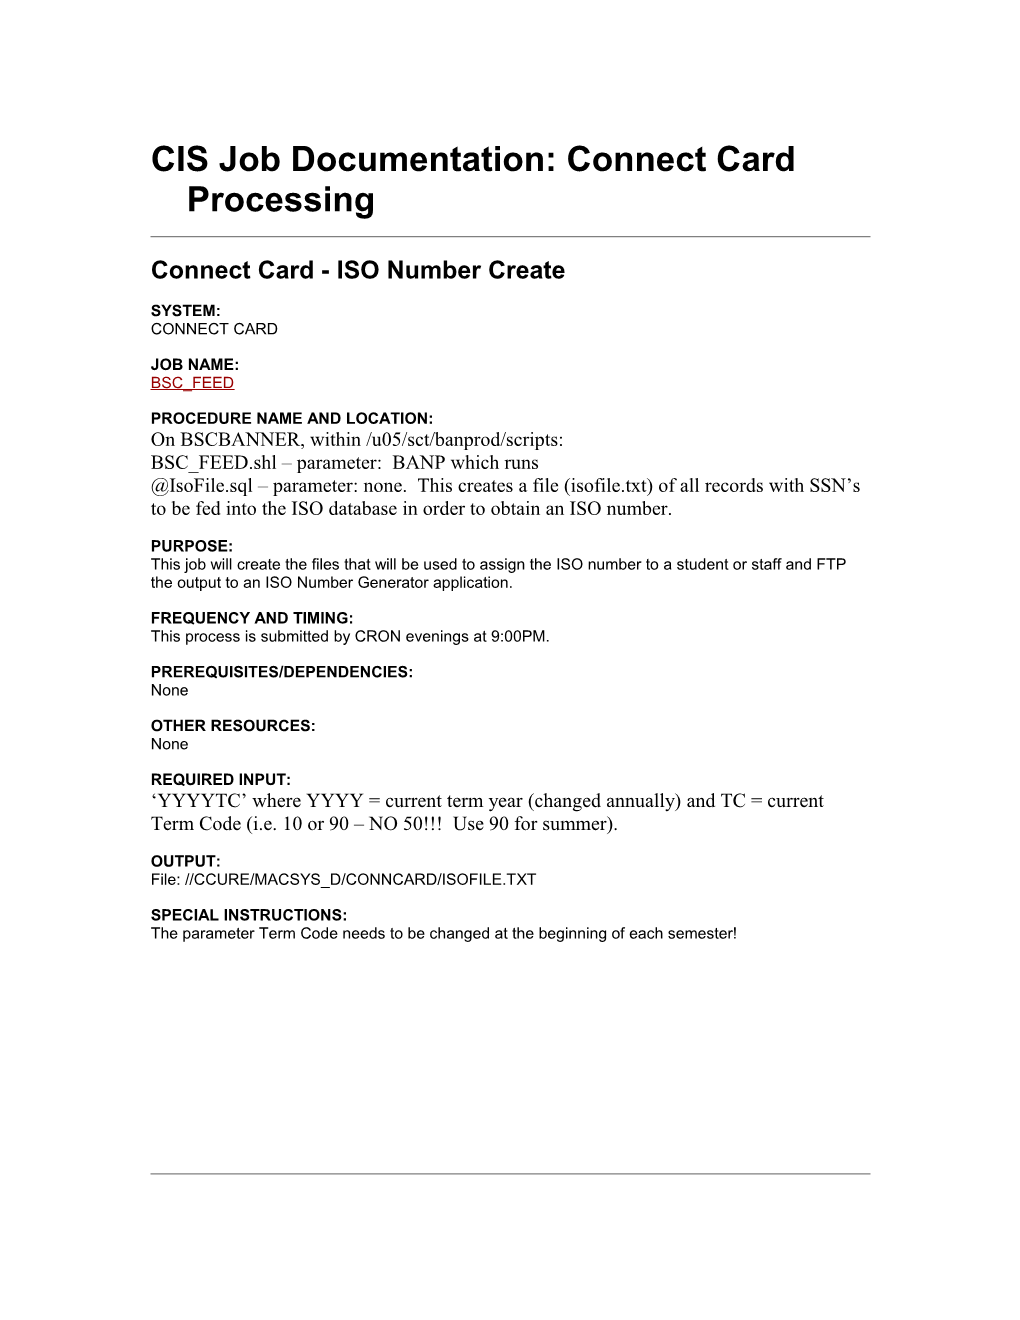 CIS Job Documentation: Connect Card Processing